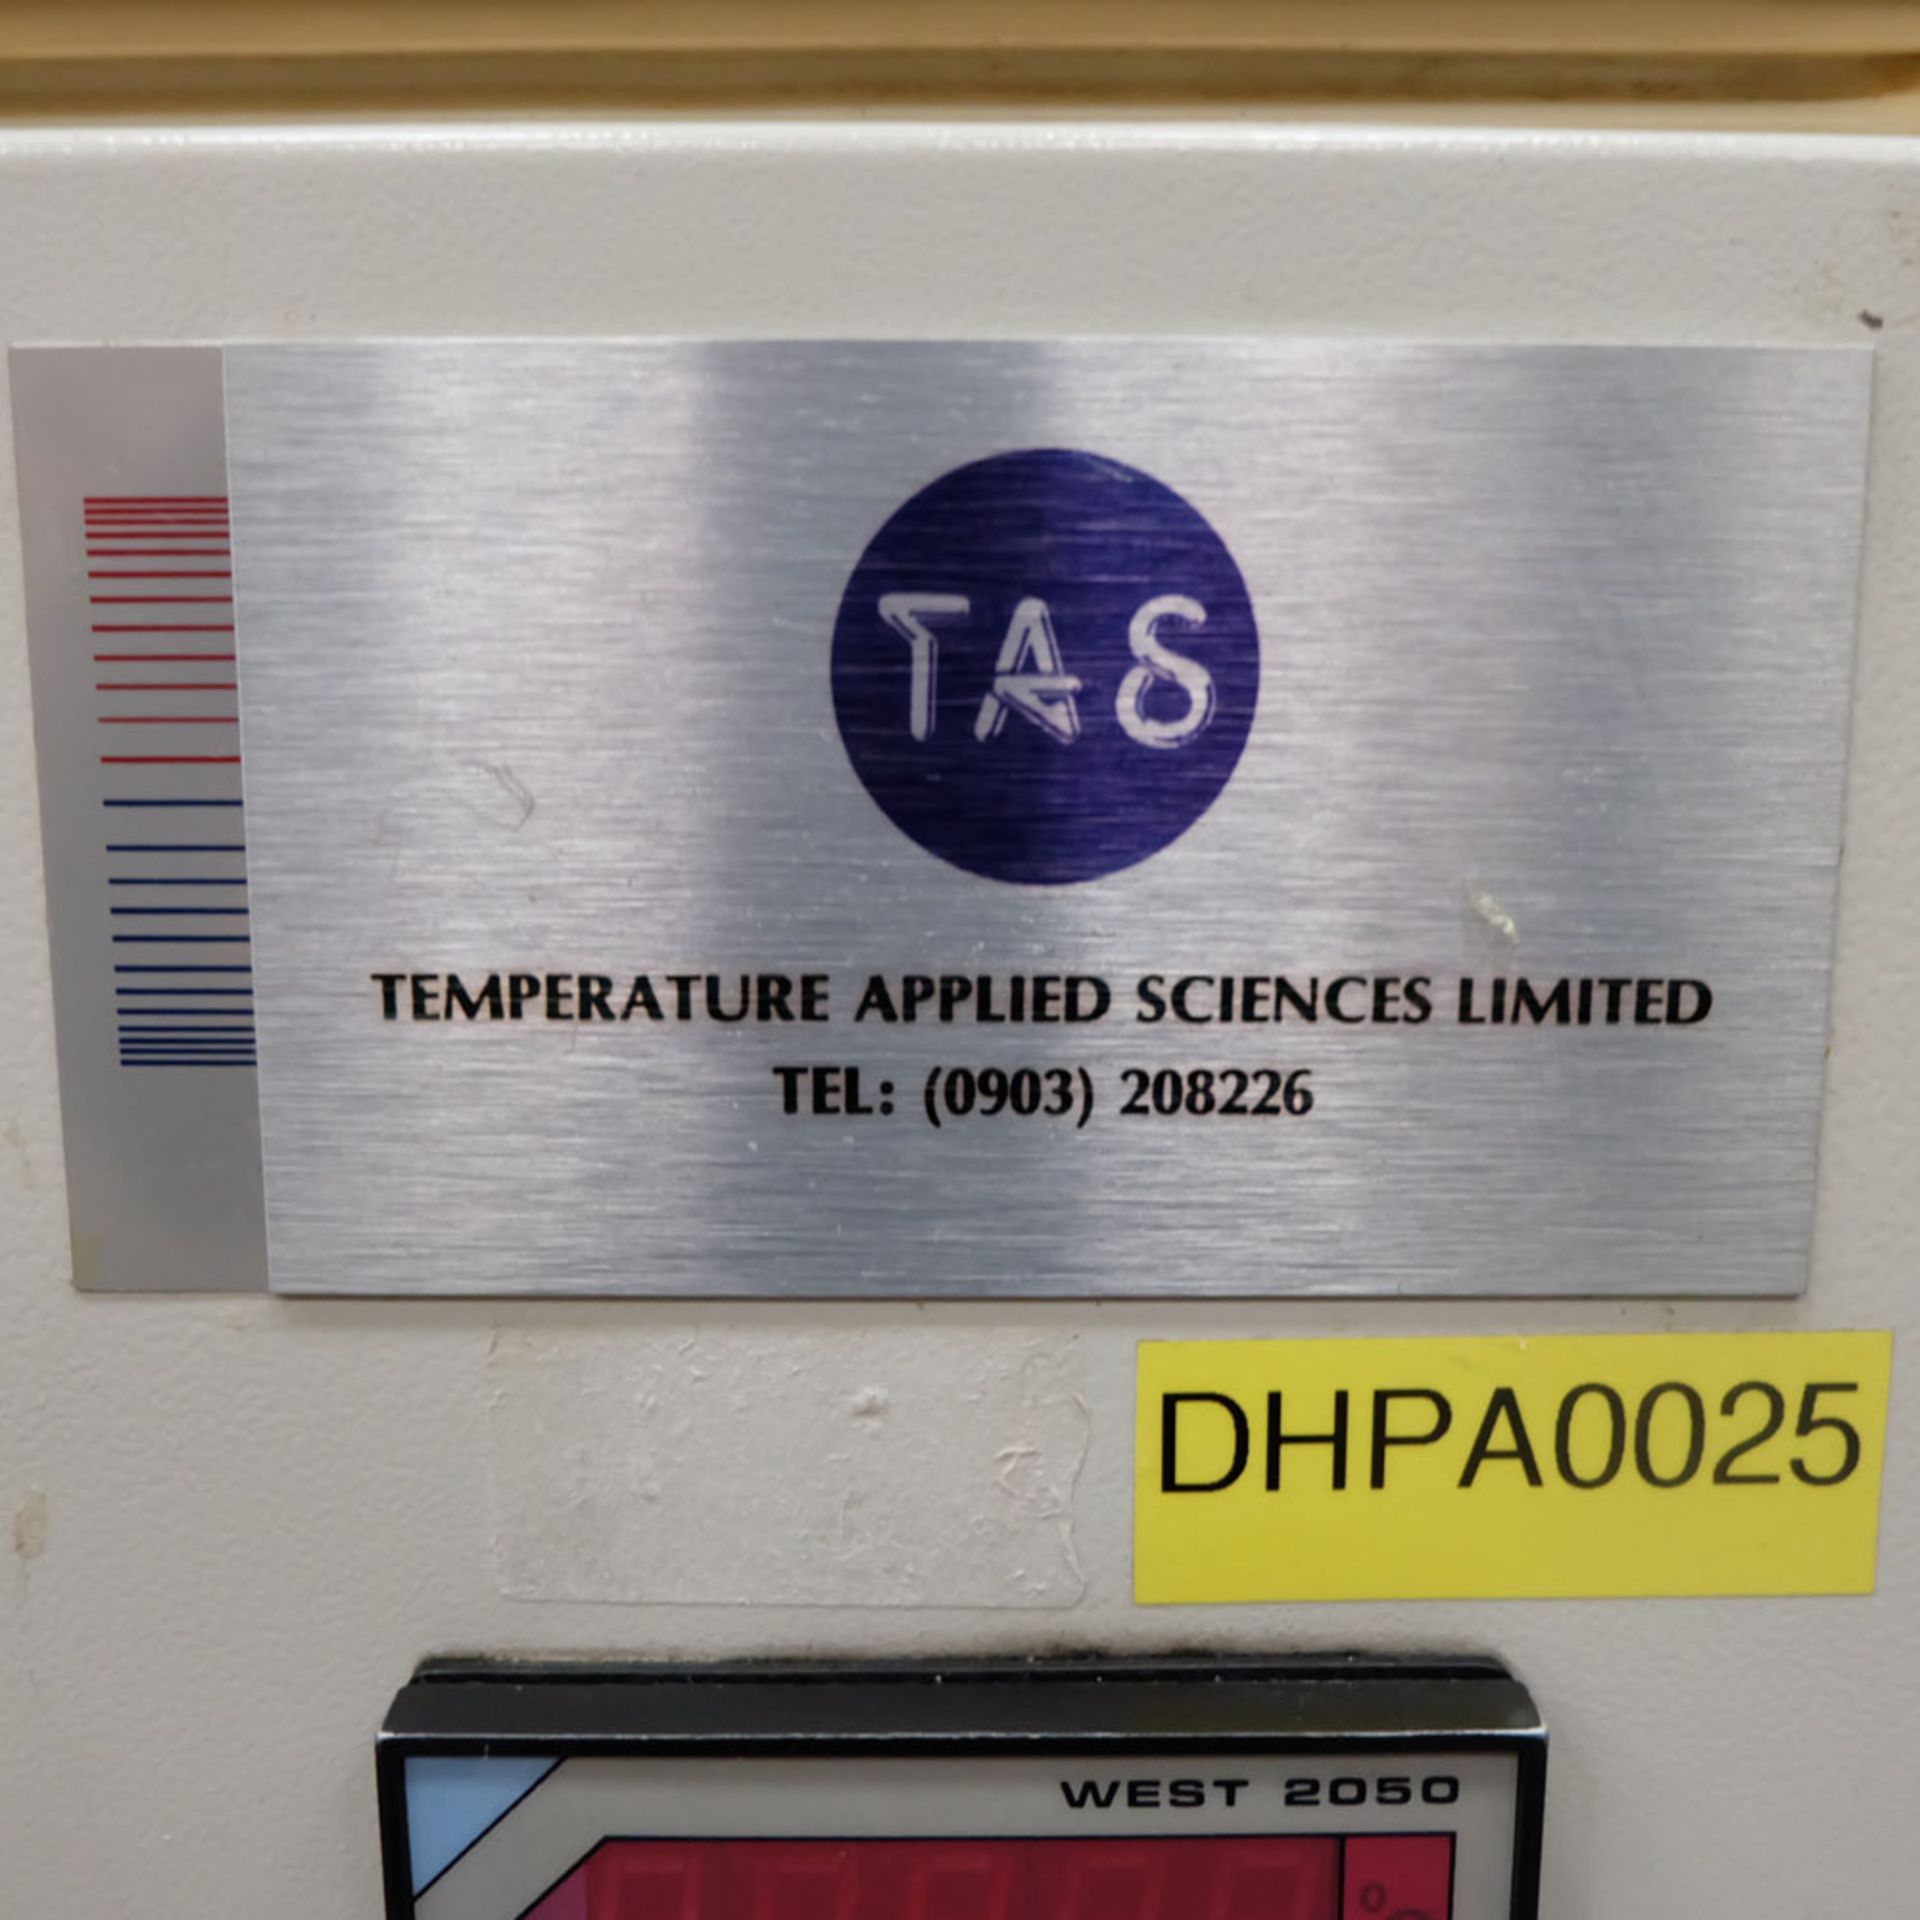 TAS Refrigeration Cabinet. Capacity 15" x 15" x 13" Deep. West 2050 Control. - Image 6 of 9